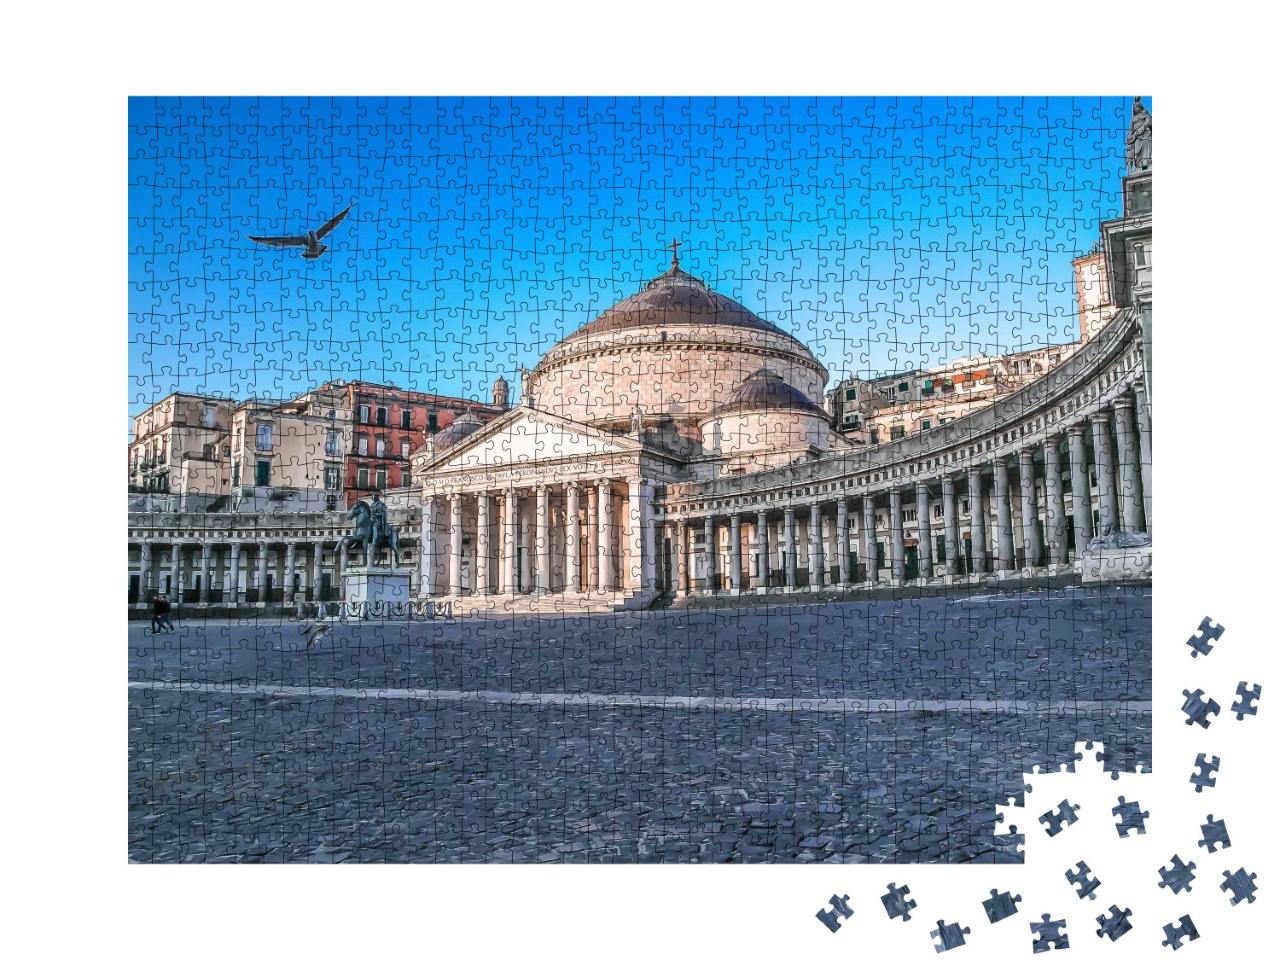 Puzzle de 1000 pièces « Vue de la Piazza del Plebiscito, Naples, Italie »